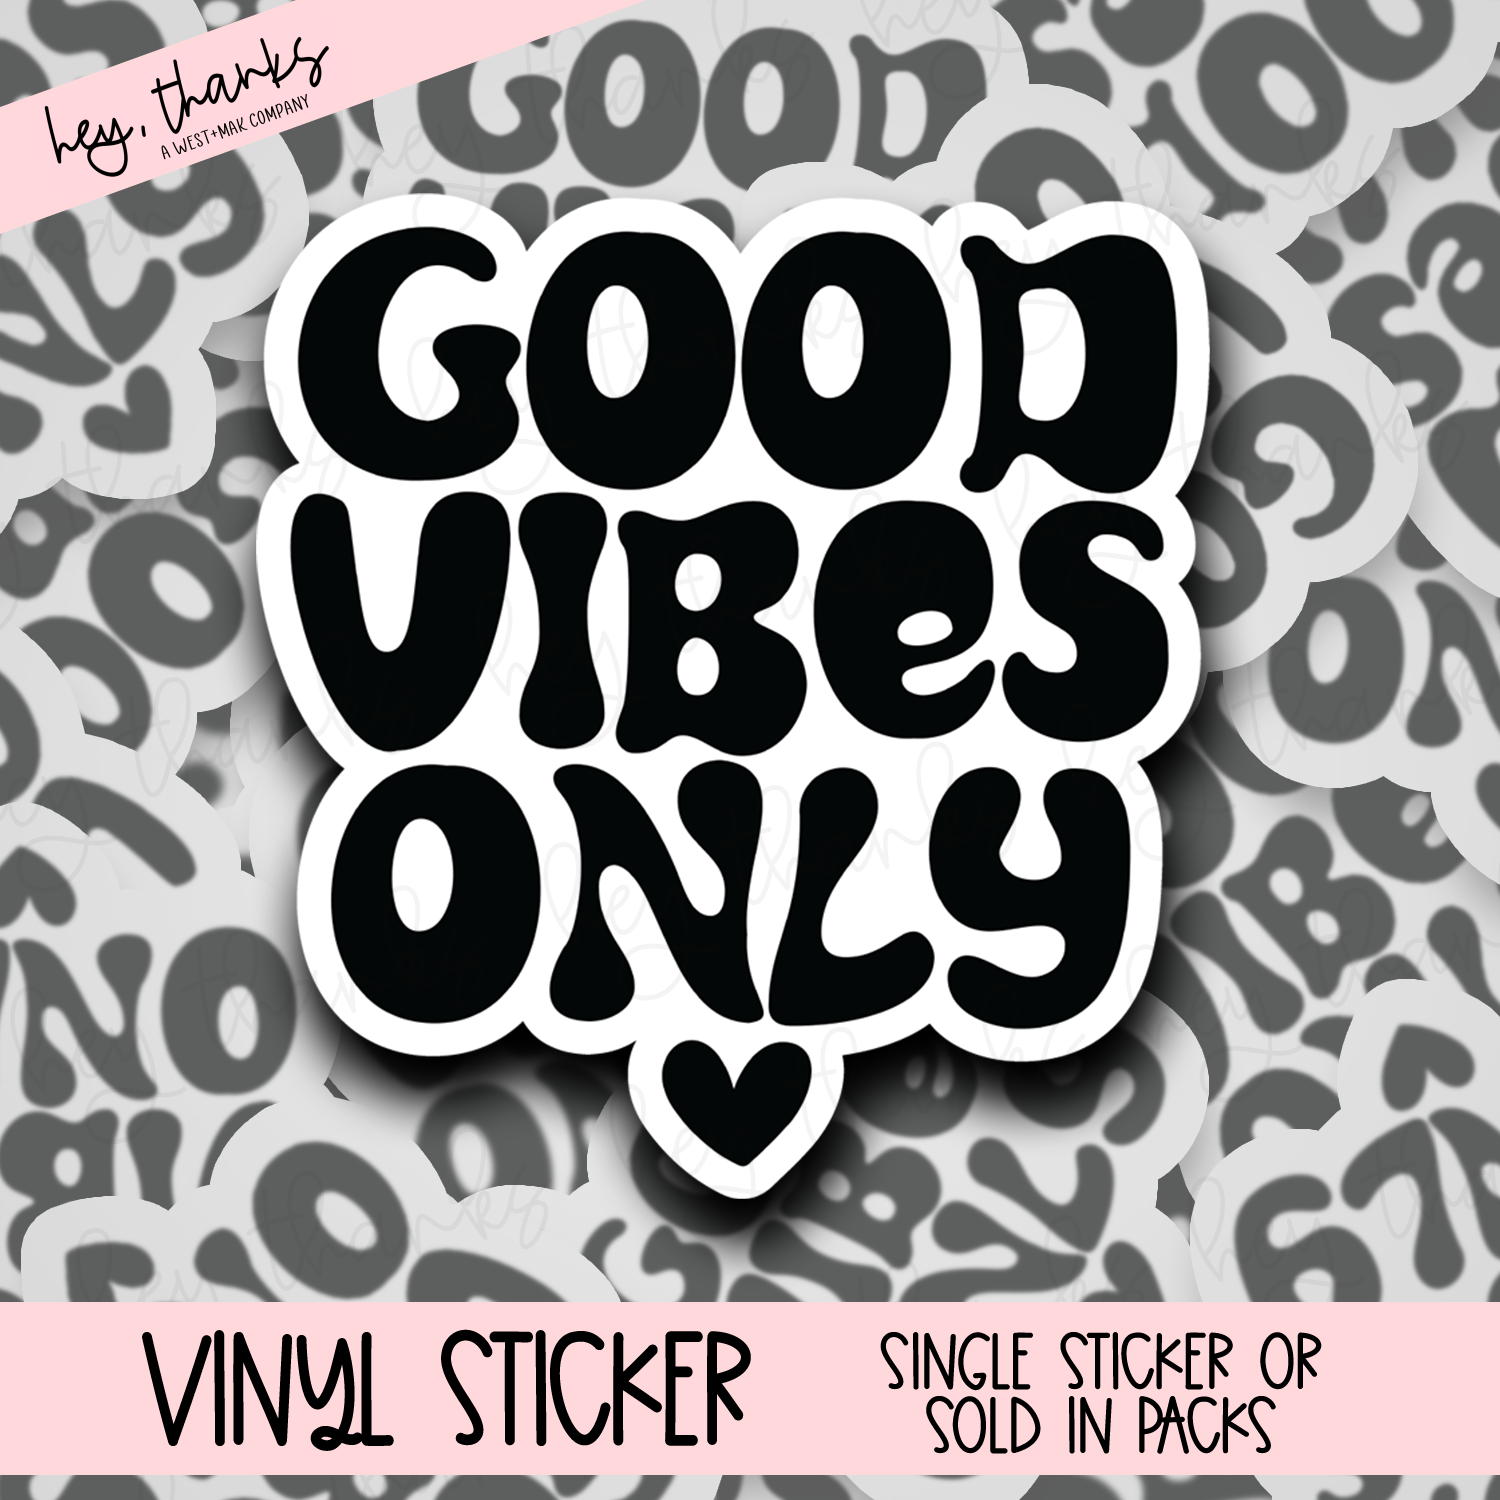 Good Vibes Only - Vinyl Sticker